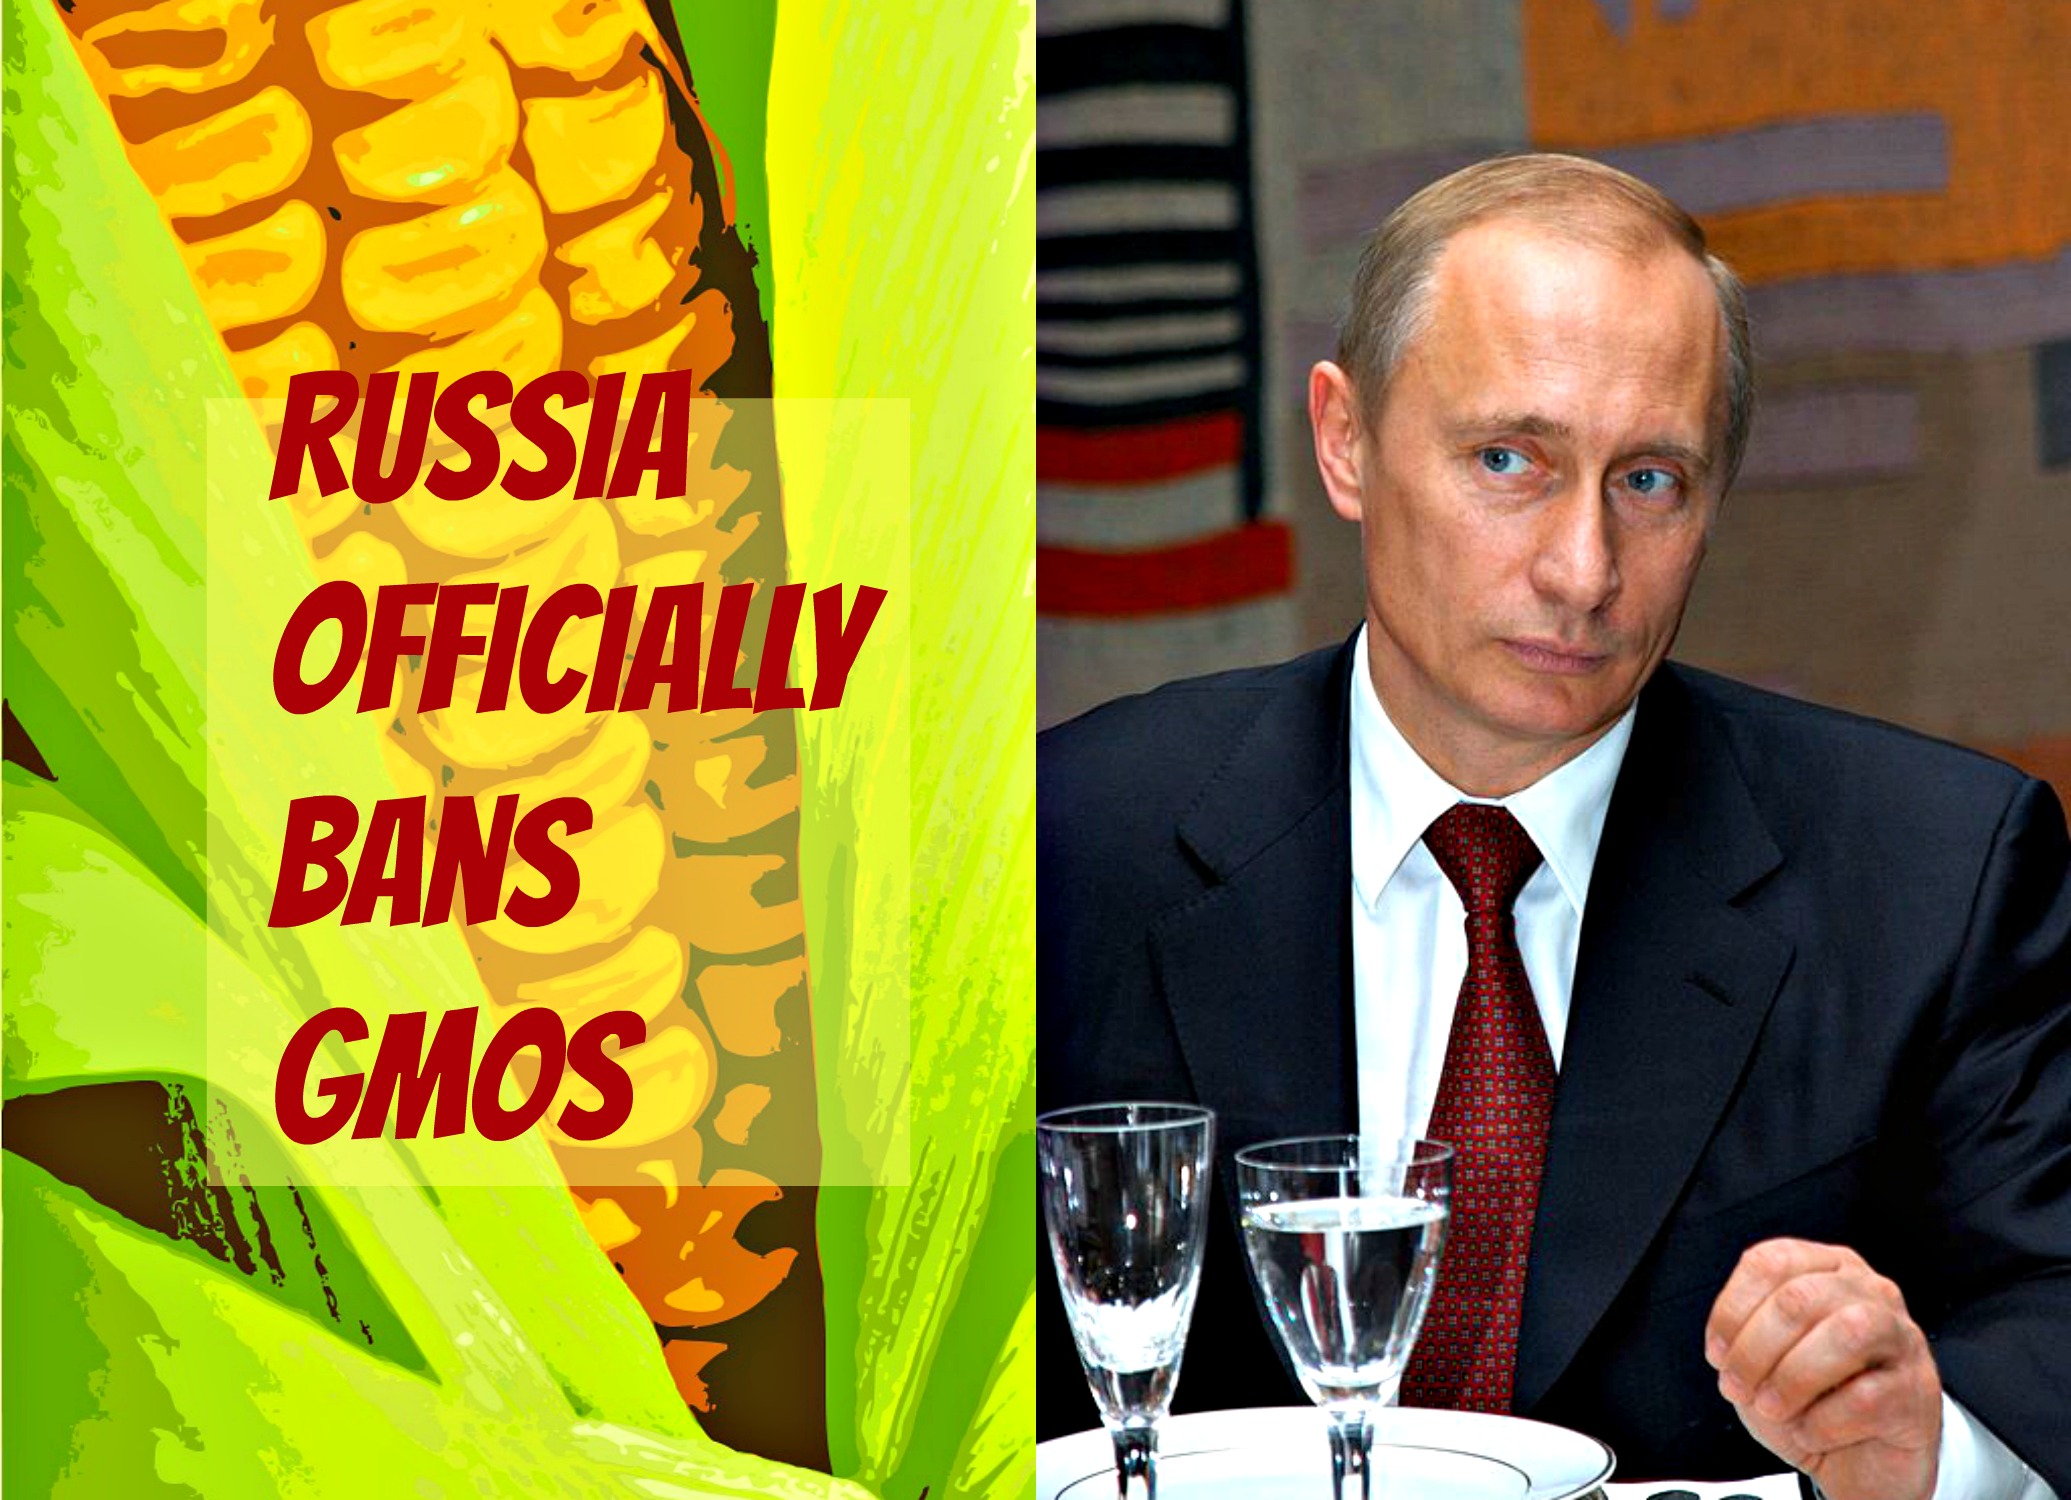 Russia bans gmos